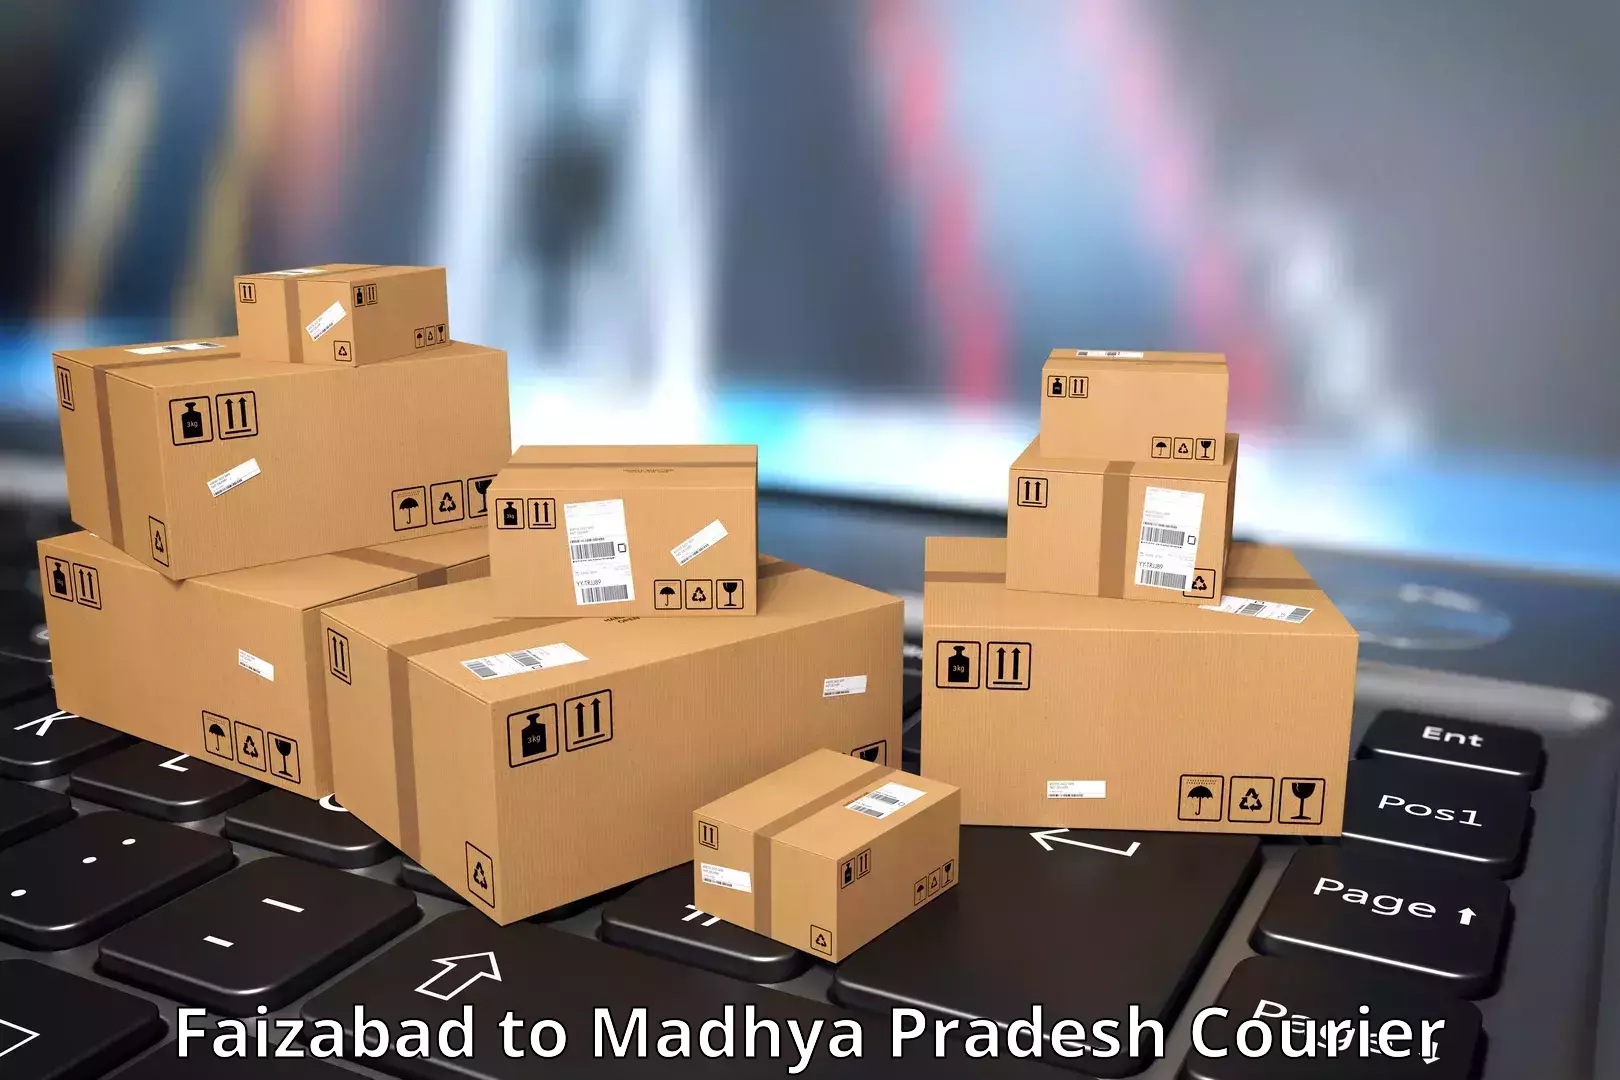 Courier service partnerships Faizabad to BHEL Bhopal